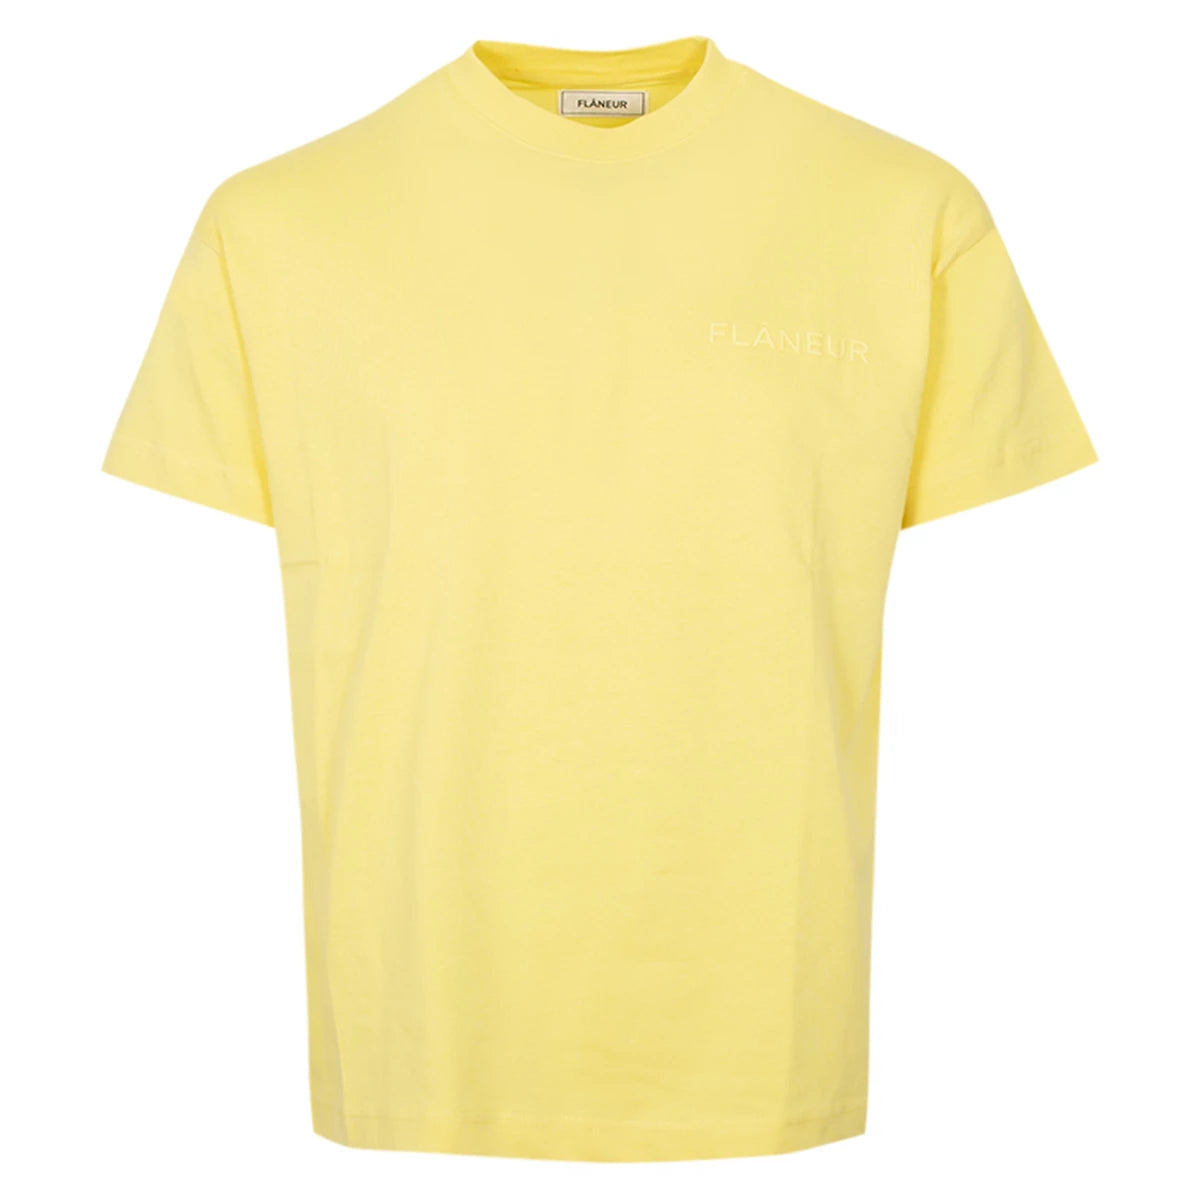 Flaneur T-shirt geel | Tonal logo shirt